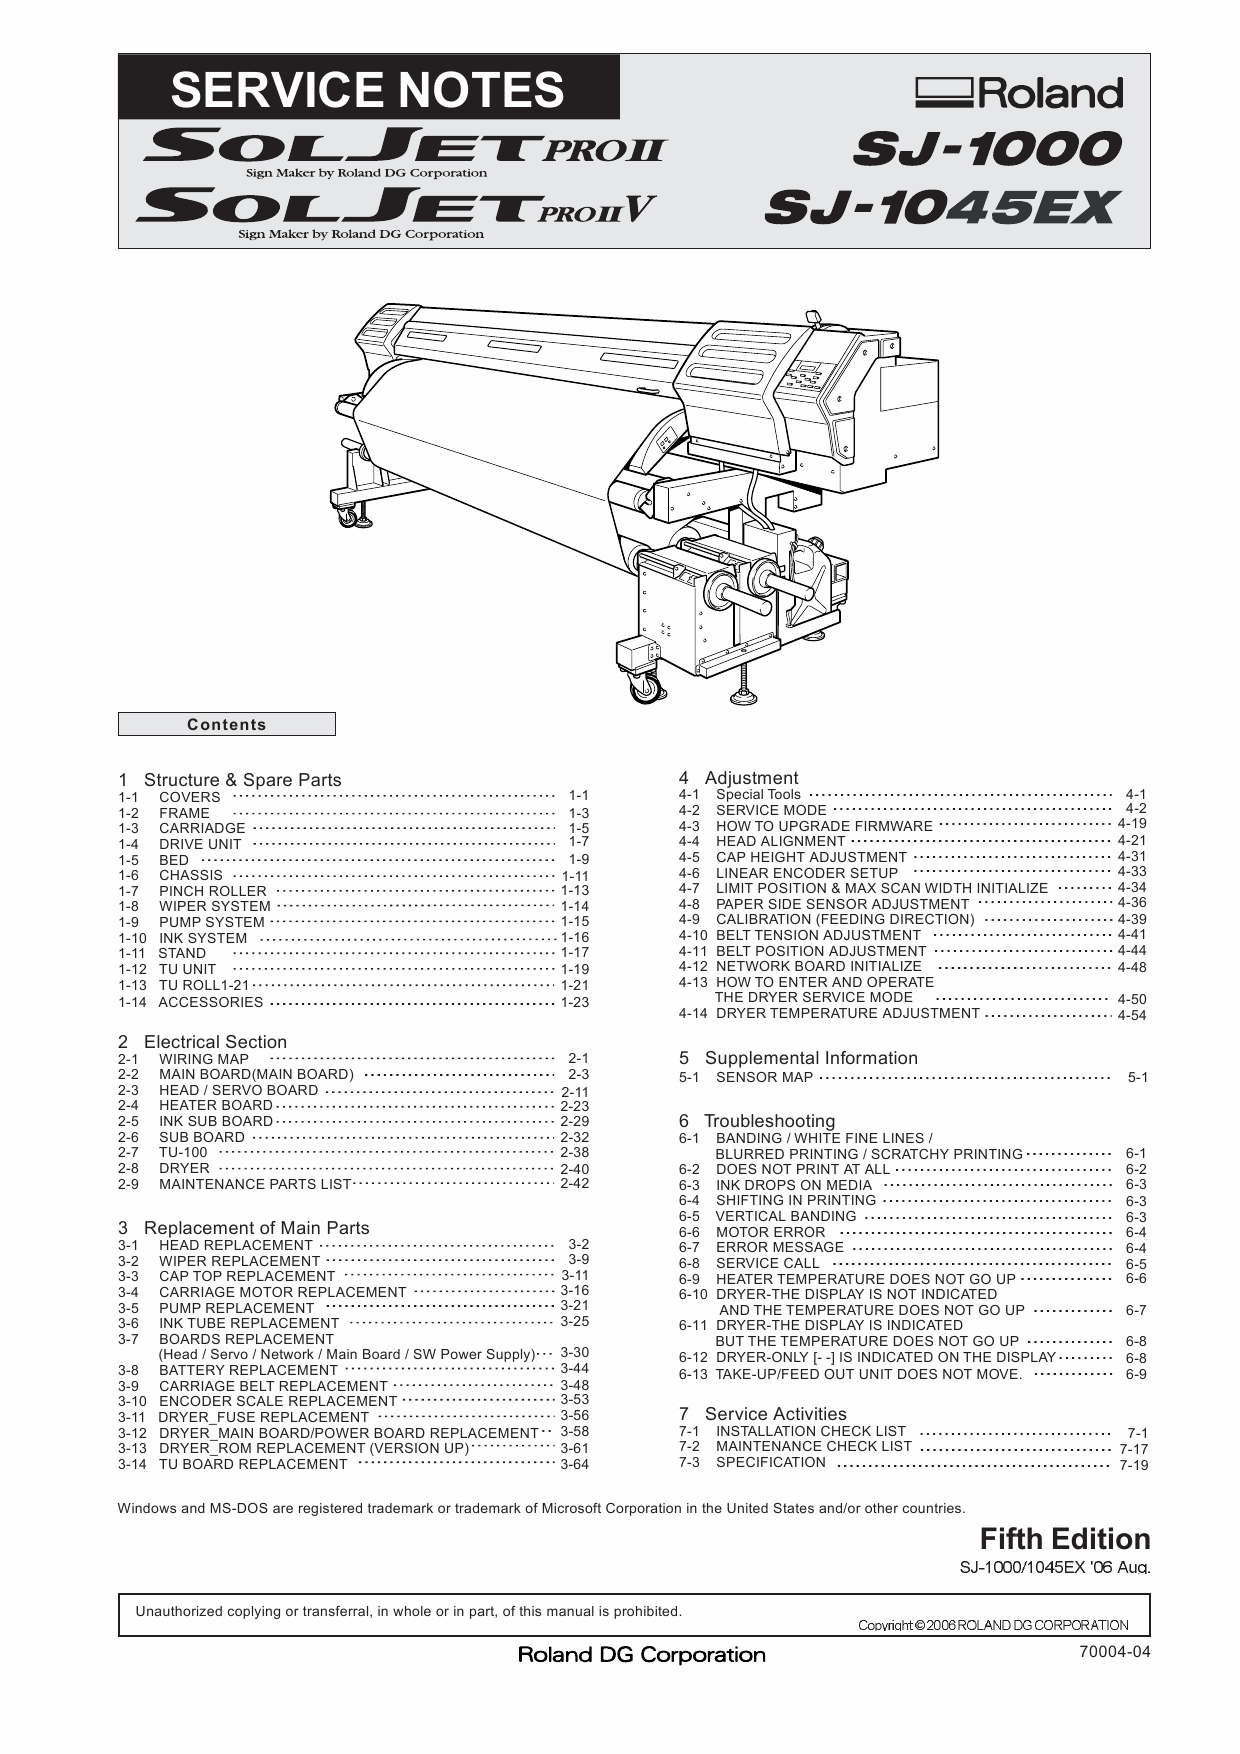 Roland SOLJET-Pro2V XJ 1045 1000 Service Notes Manual-1